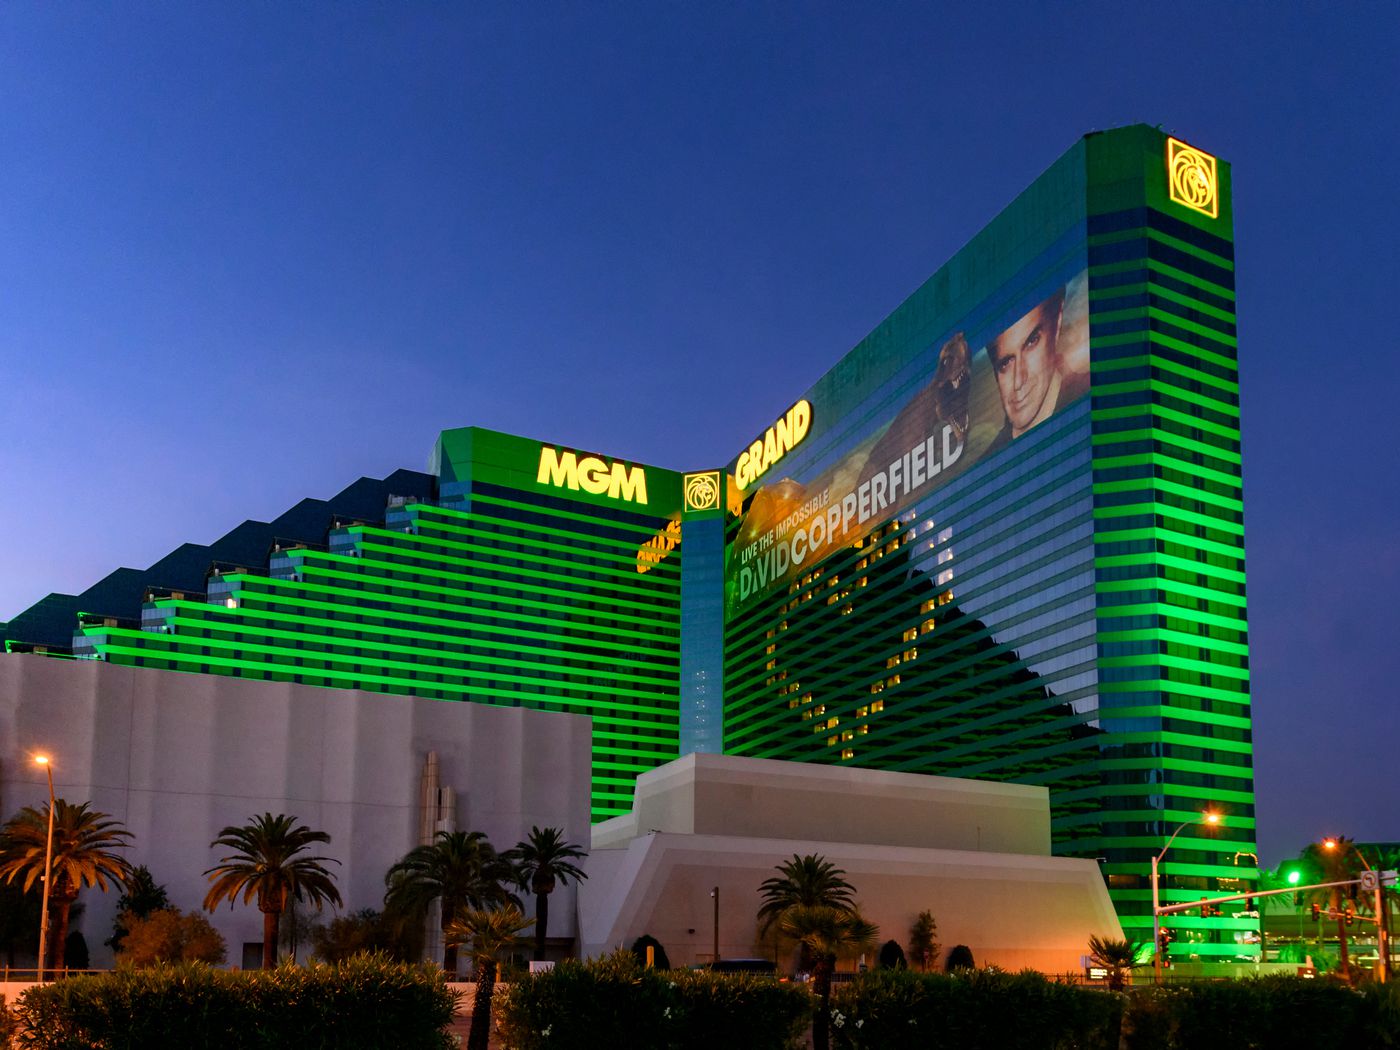 MGM resort Las Vegas